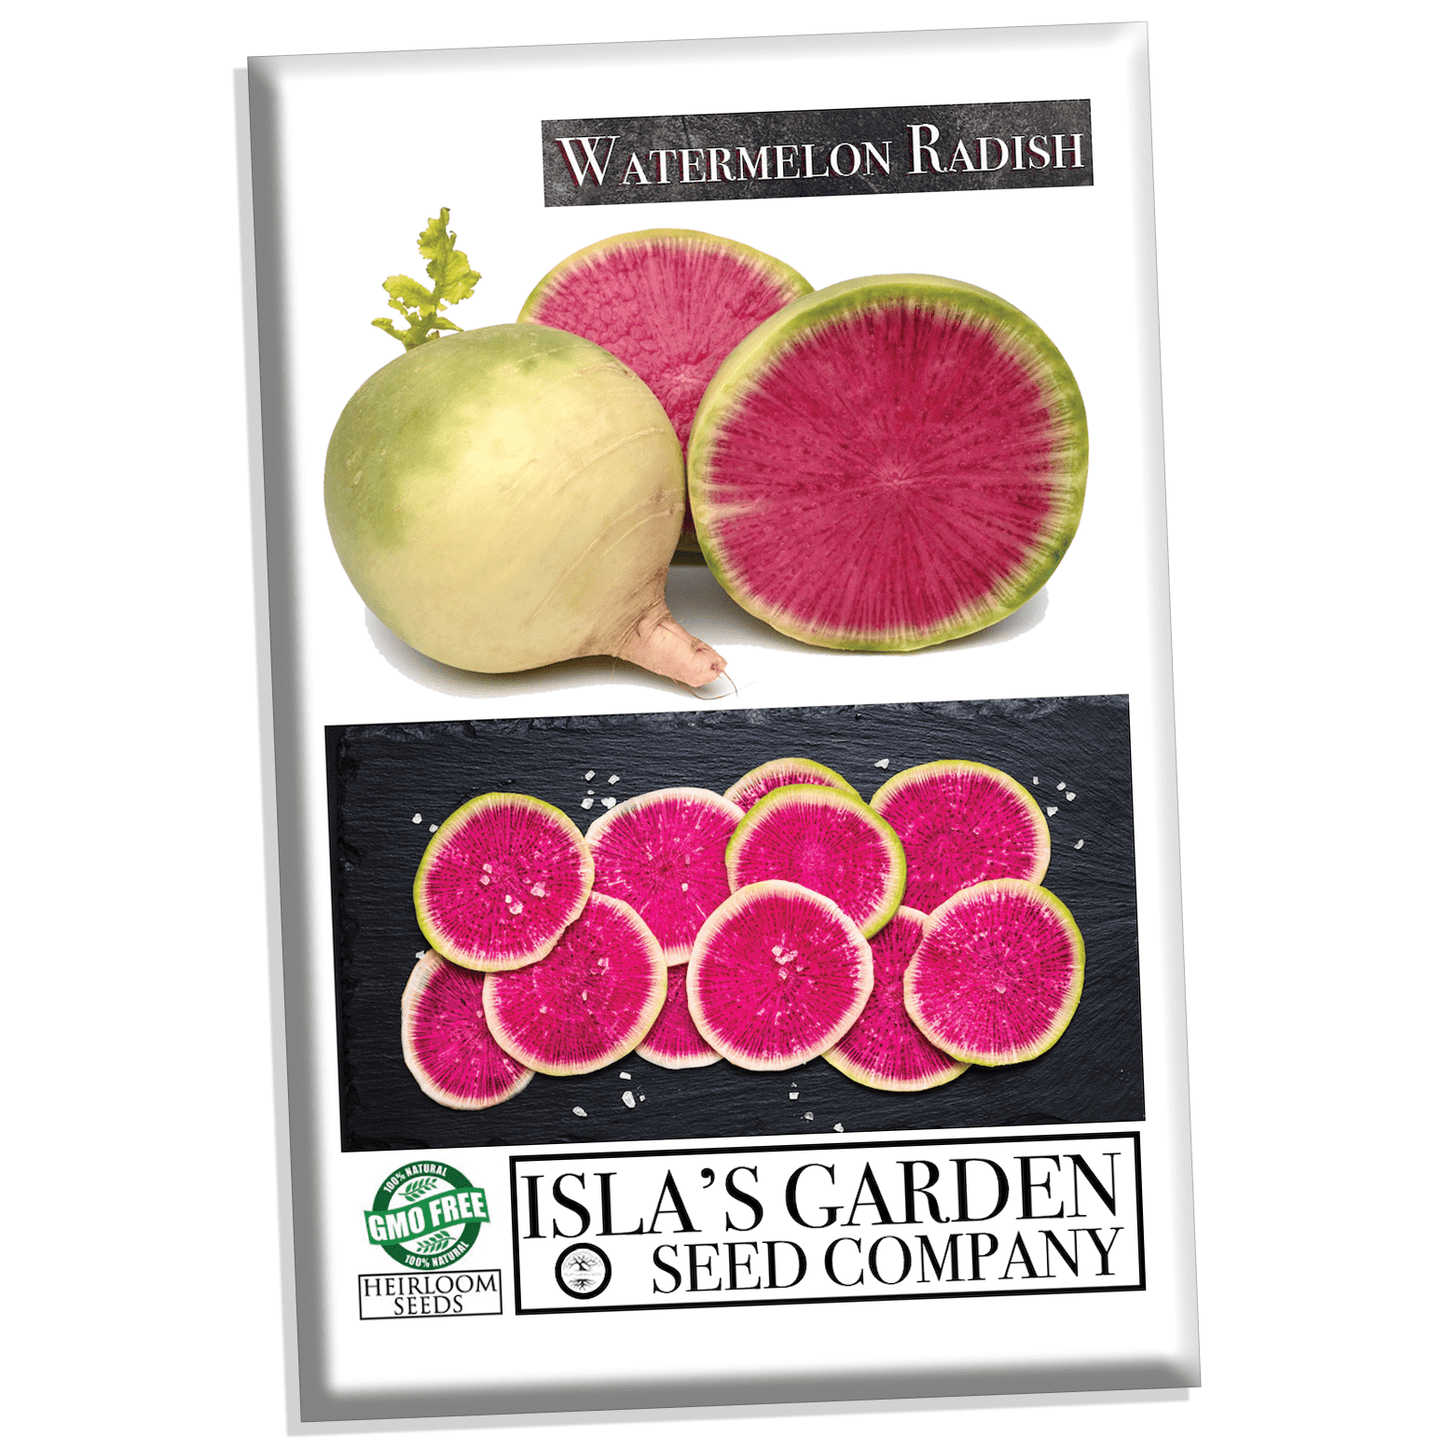 Watermelon Radish Seeds, 120 Heirloom Seeds Per Packet, Non GMO Seeds